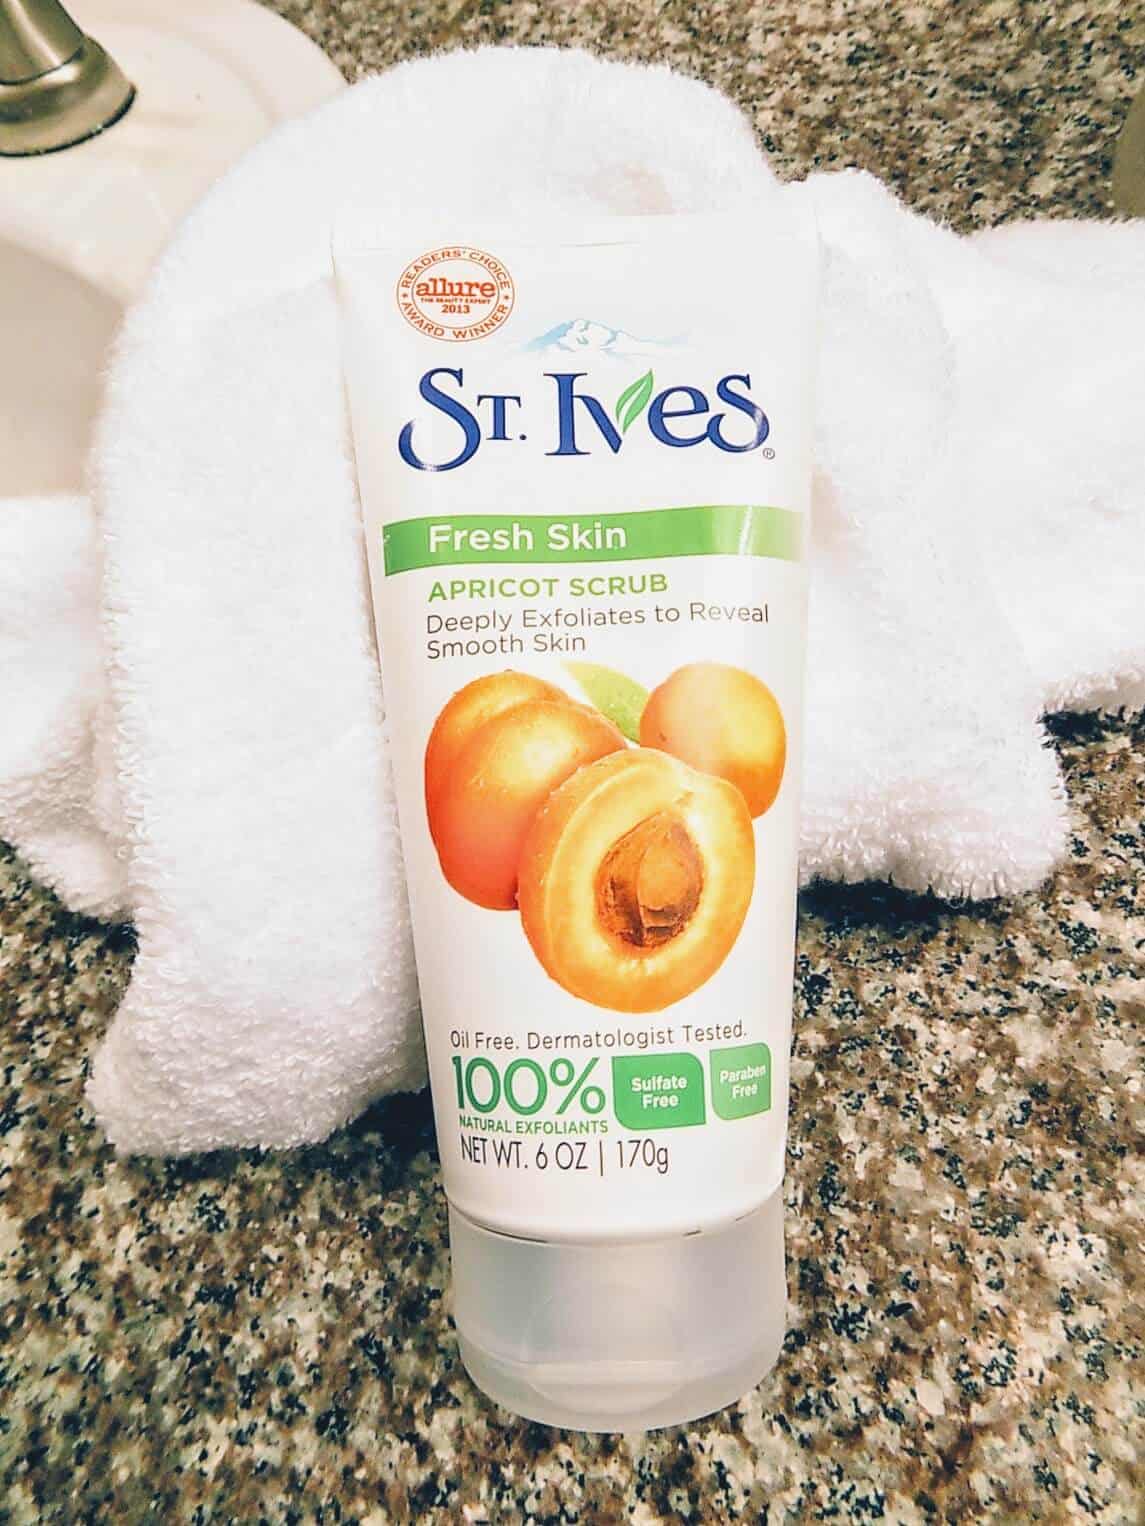 St Ives Fresh Skin Apricot Scrub in front of white blanket.